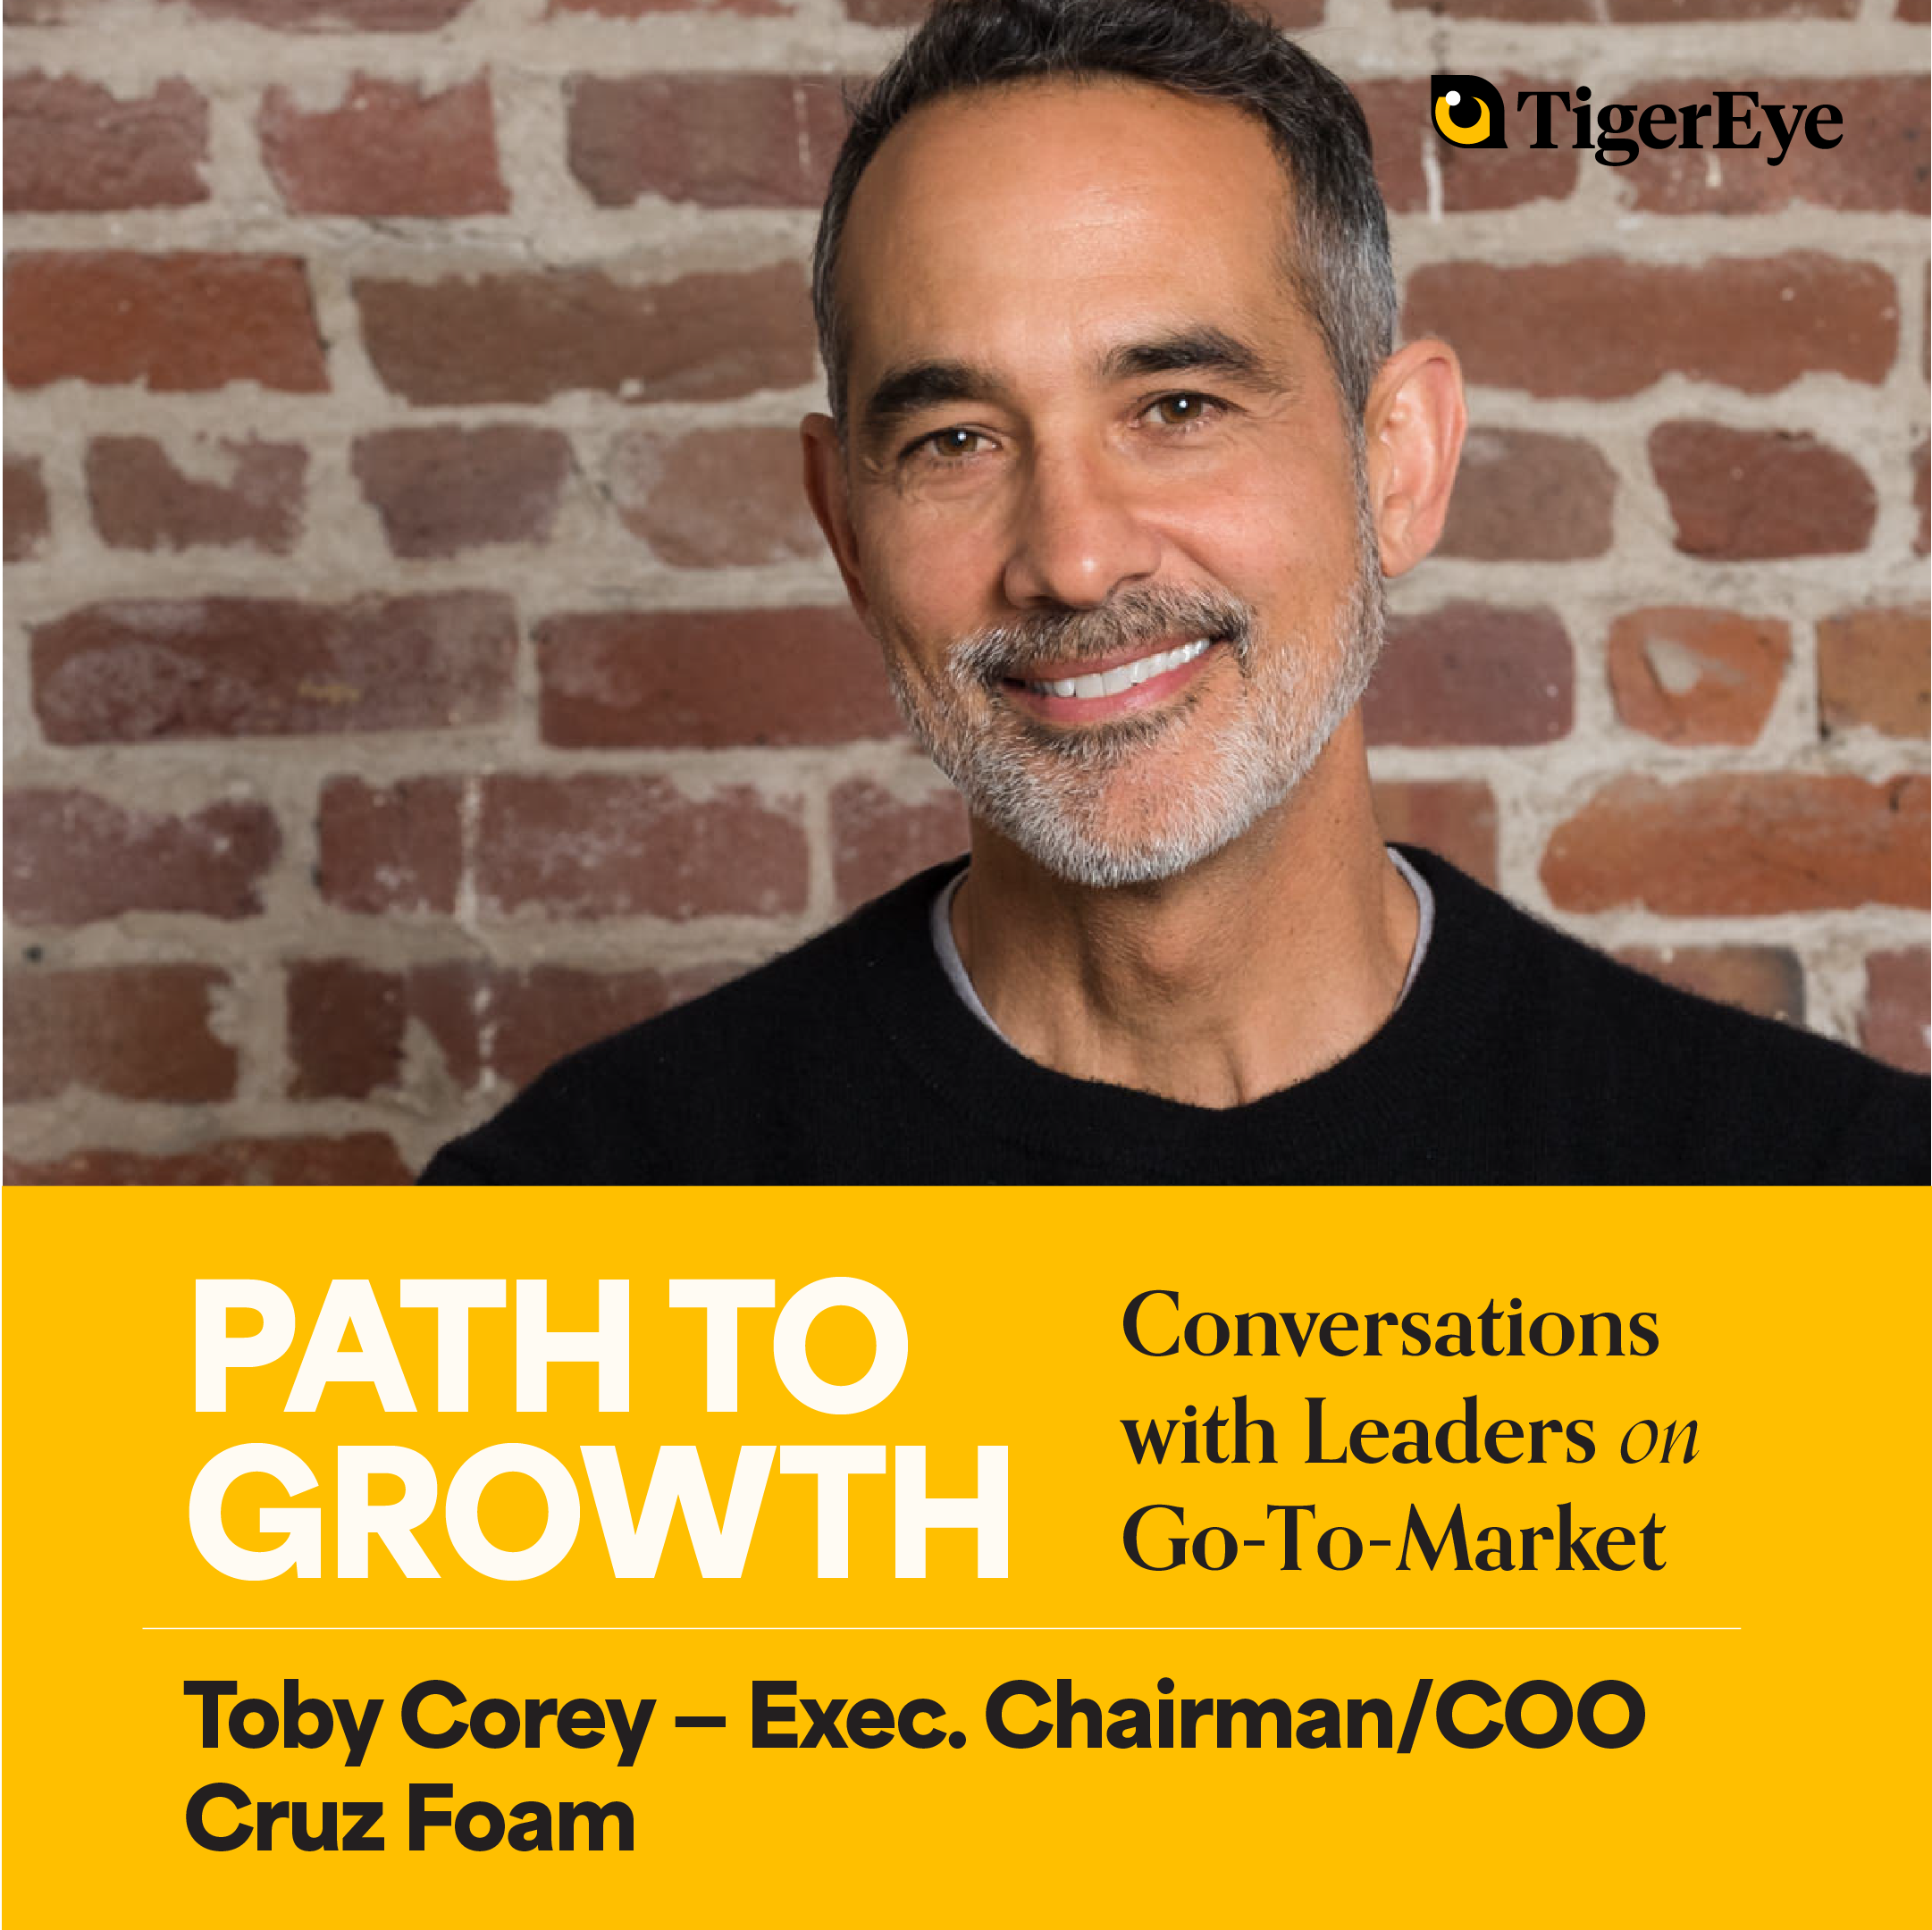 Toby Corey - Exec. Chairman/COO - Cruz Foam | Building for Sustainability & Impact